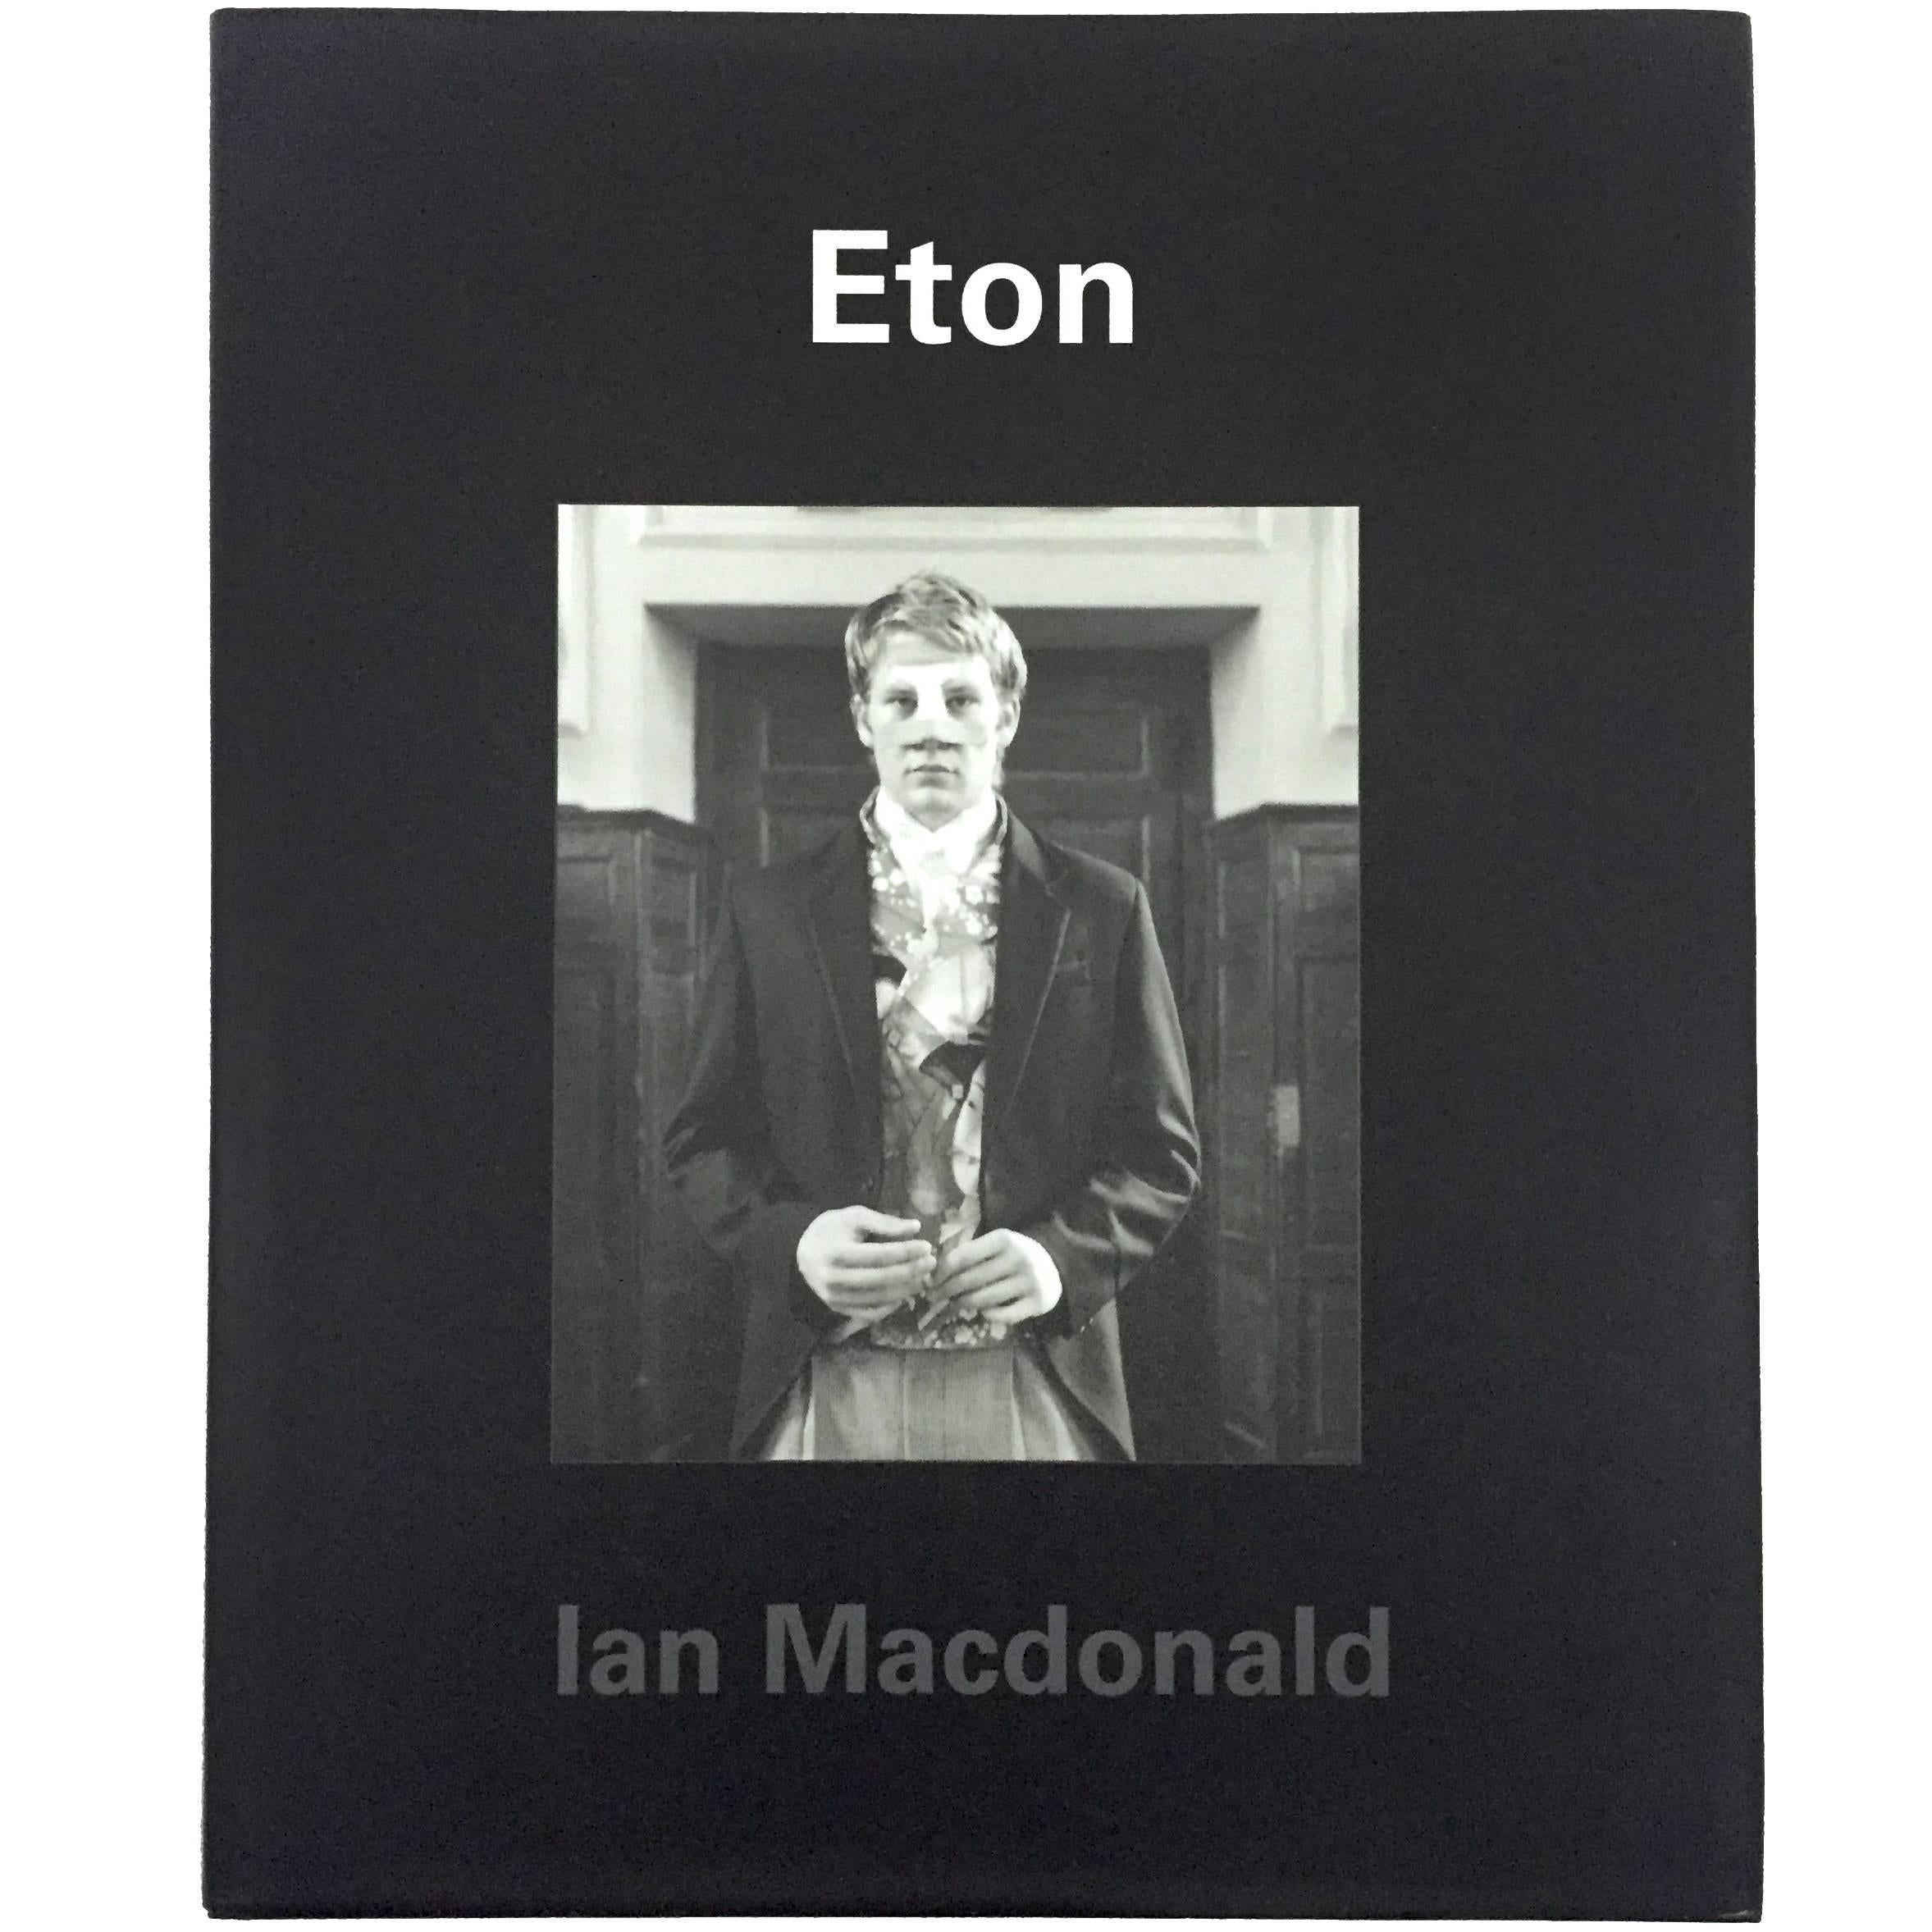 Eton – Ian Macdonald (Signed) 2007 Book